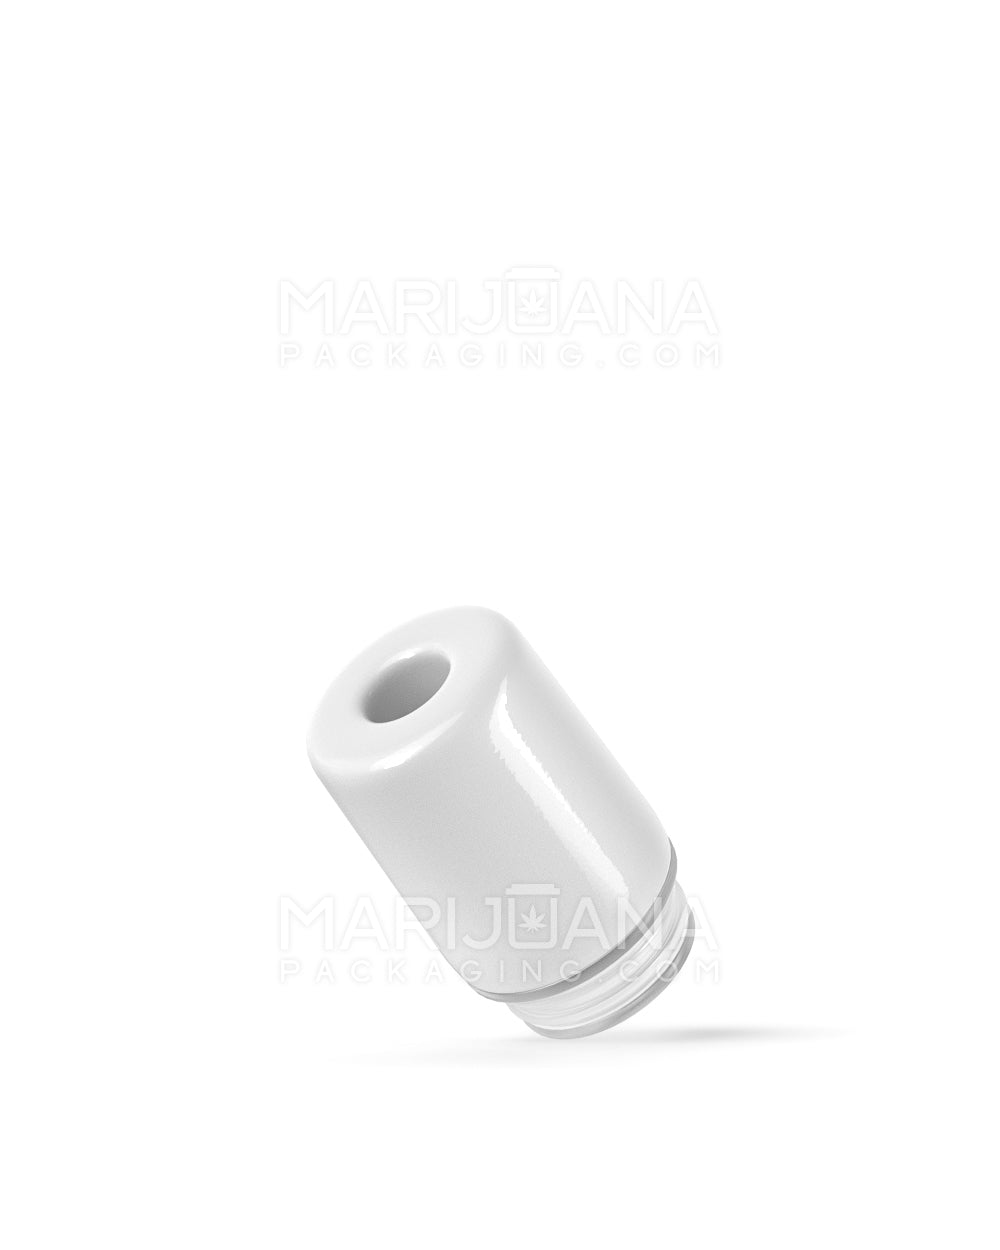 AVD | Barrel Vape Mouthpiece for Glass Cartridges | White Ceramic - Eazy Press - 600 Count - 4